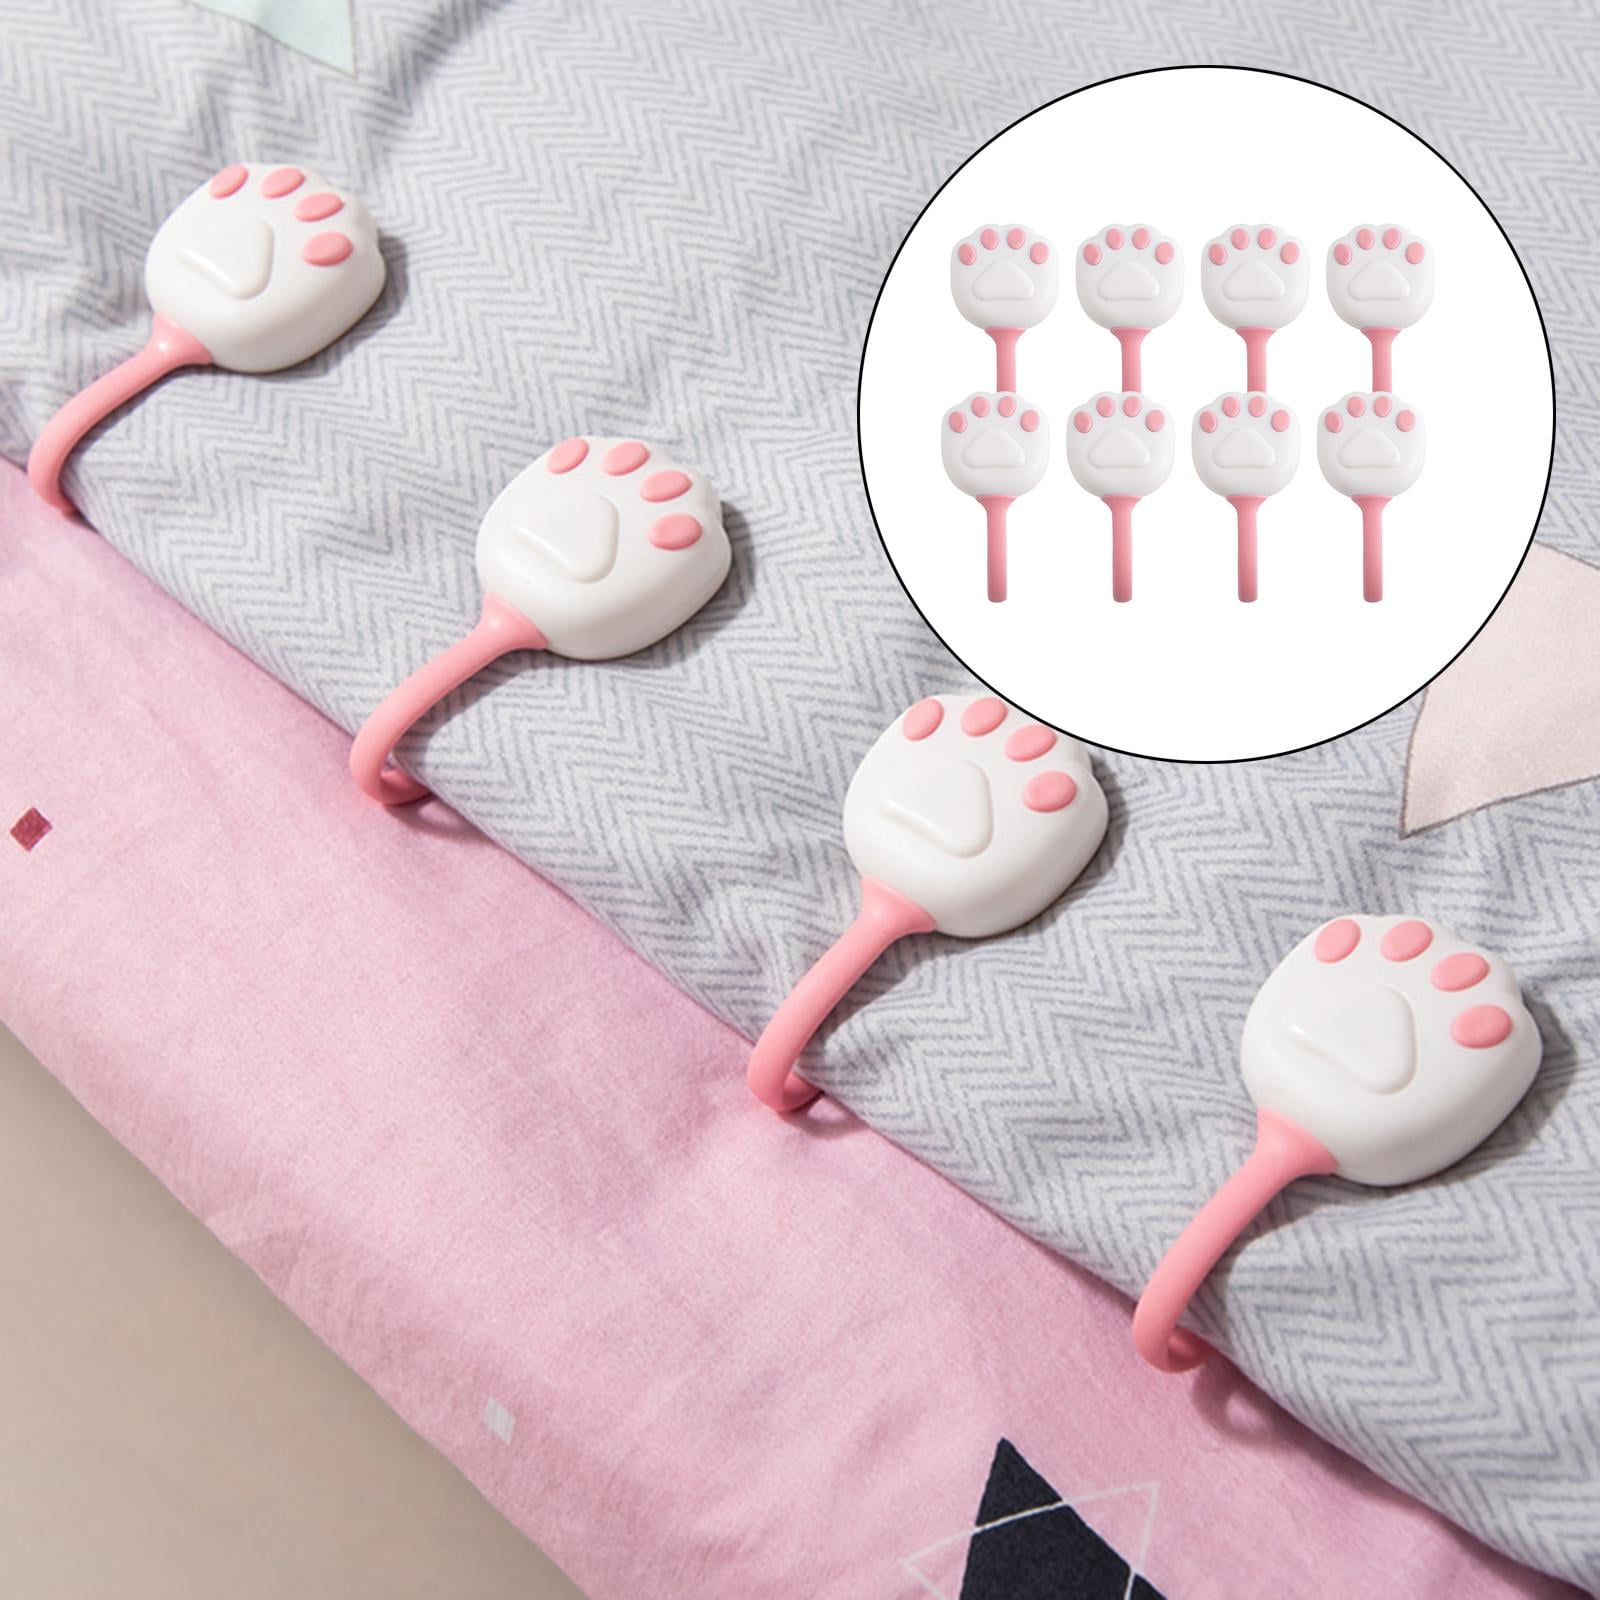 8Pcs Bed Duvet Covers Sheet Holder Clip Clamp Fastener Quilt Cover Gripper Pink 